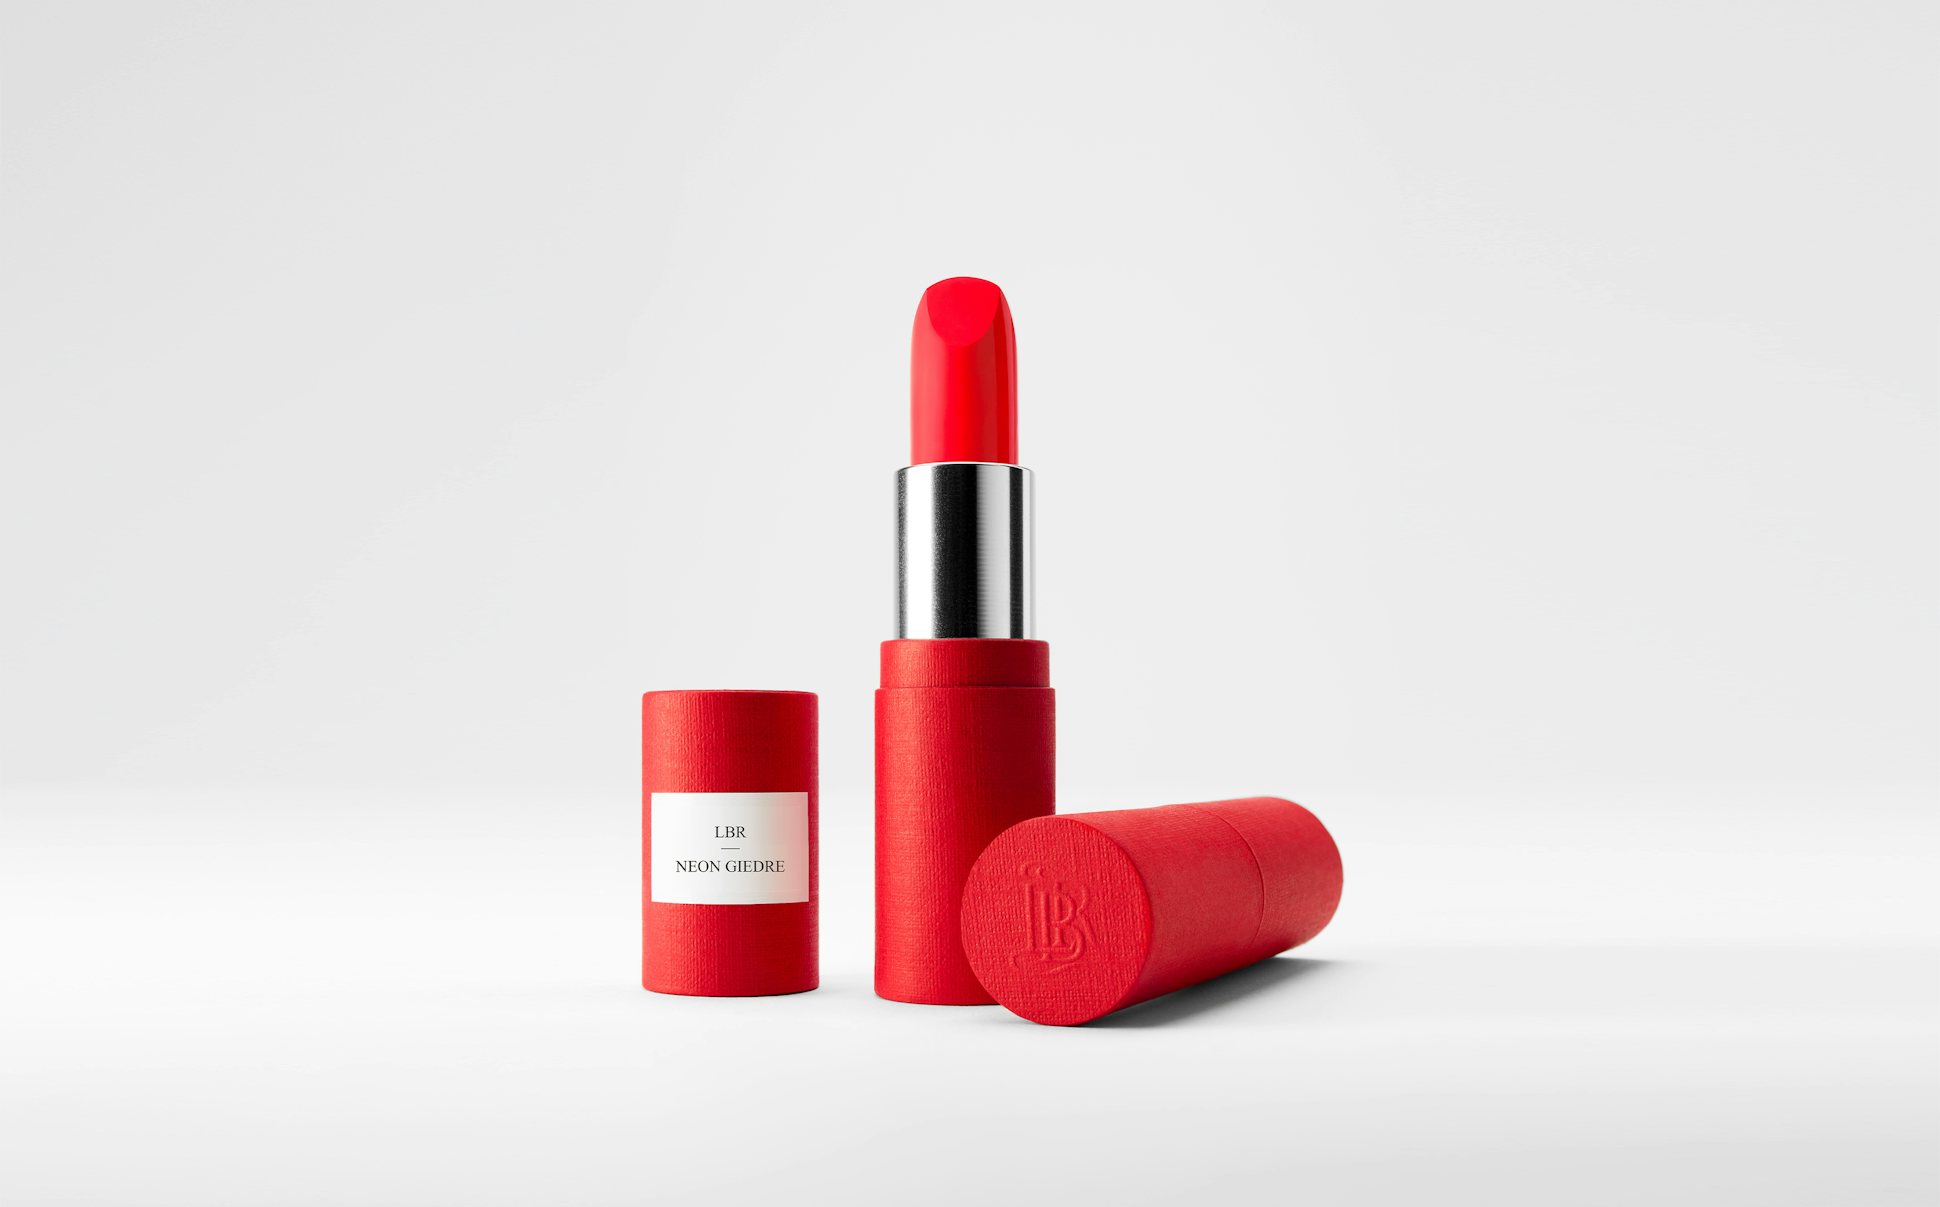 La bouche rouge Neon Giedre lipstick in the red paper case